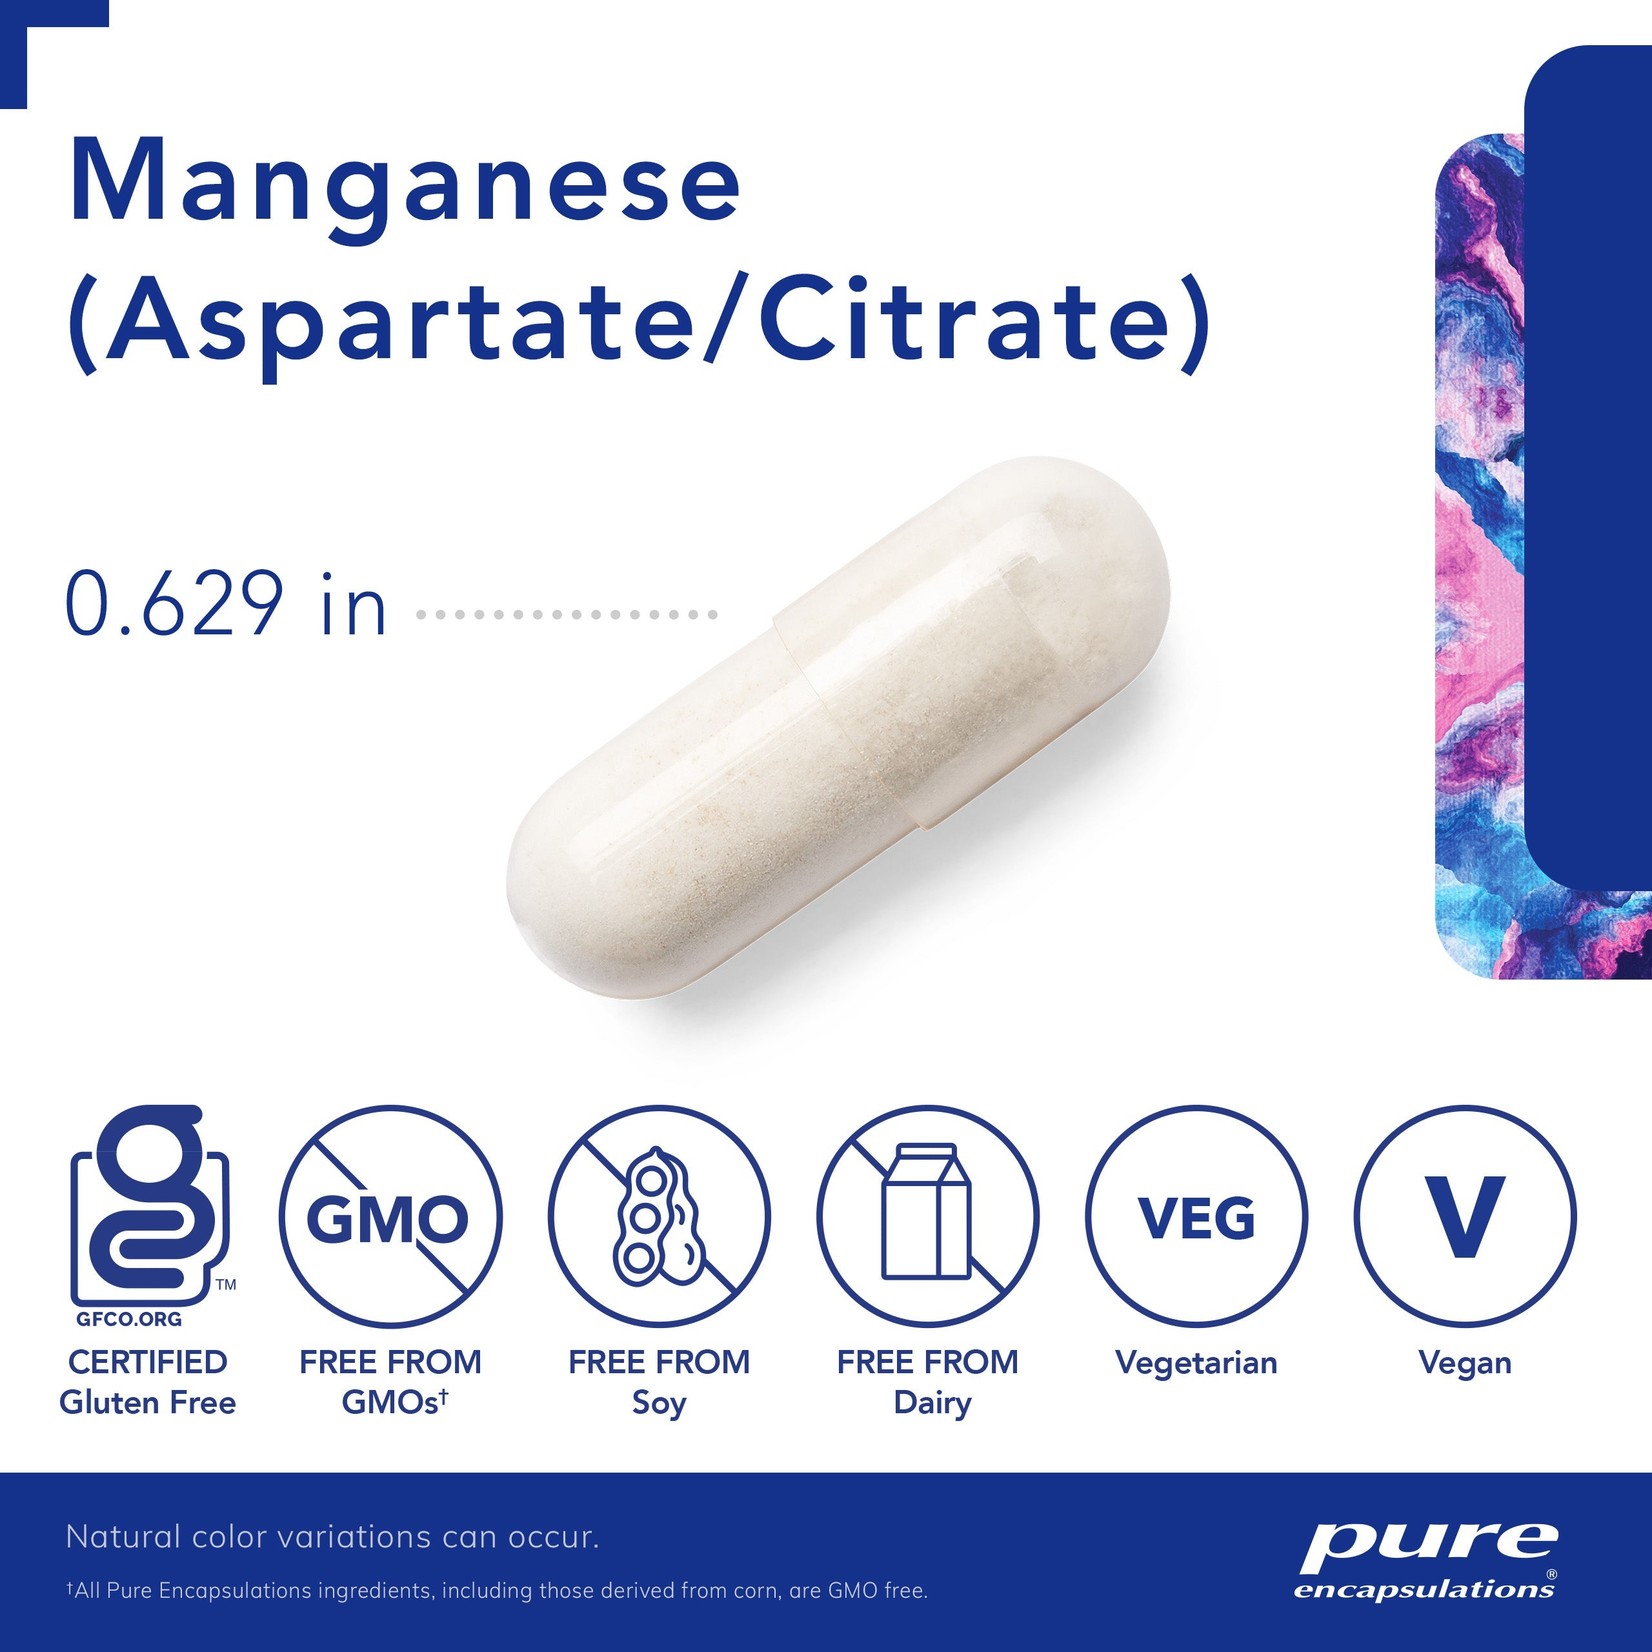 Pure Encapsulations Pure Encapsulations - Manganese Aspartate - 60 Capsules